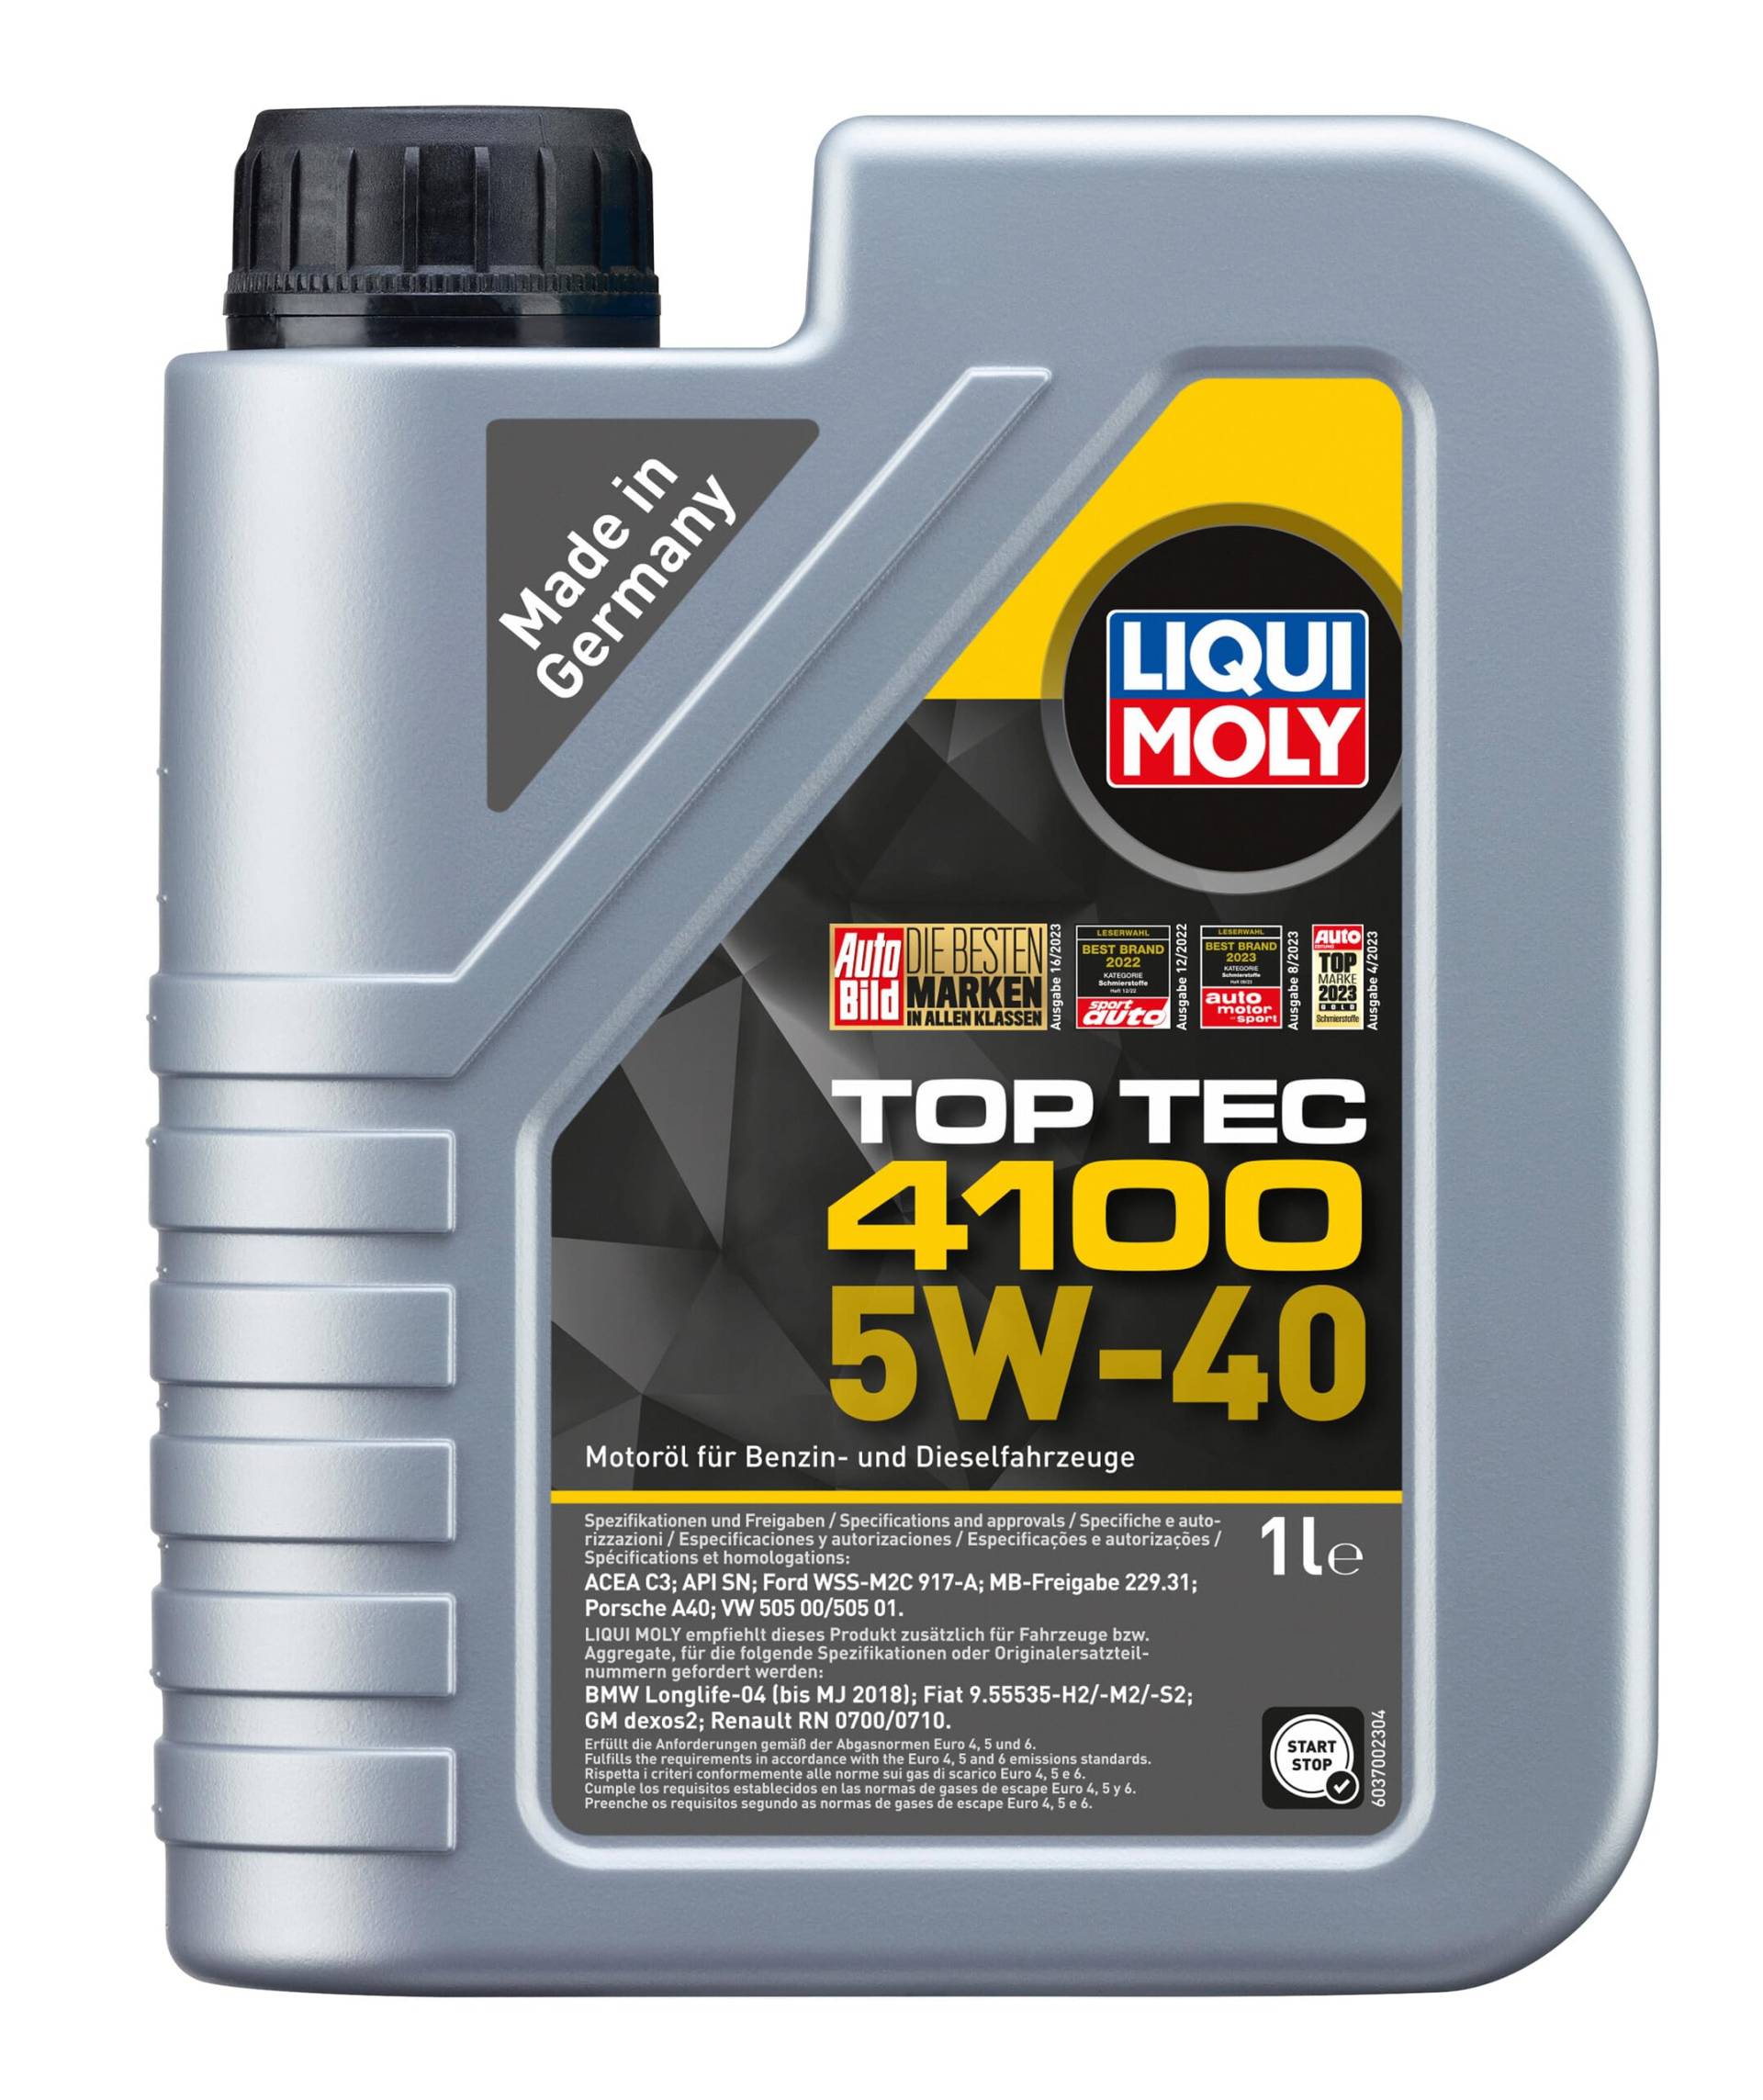 LIQUI MOLY Top Tec 4100 5W-40 | 1 L | Synthesetechnologie Motoröl | Art.-Nr.: 3700 von Liqui Moly